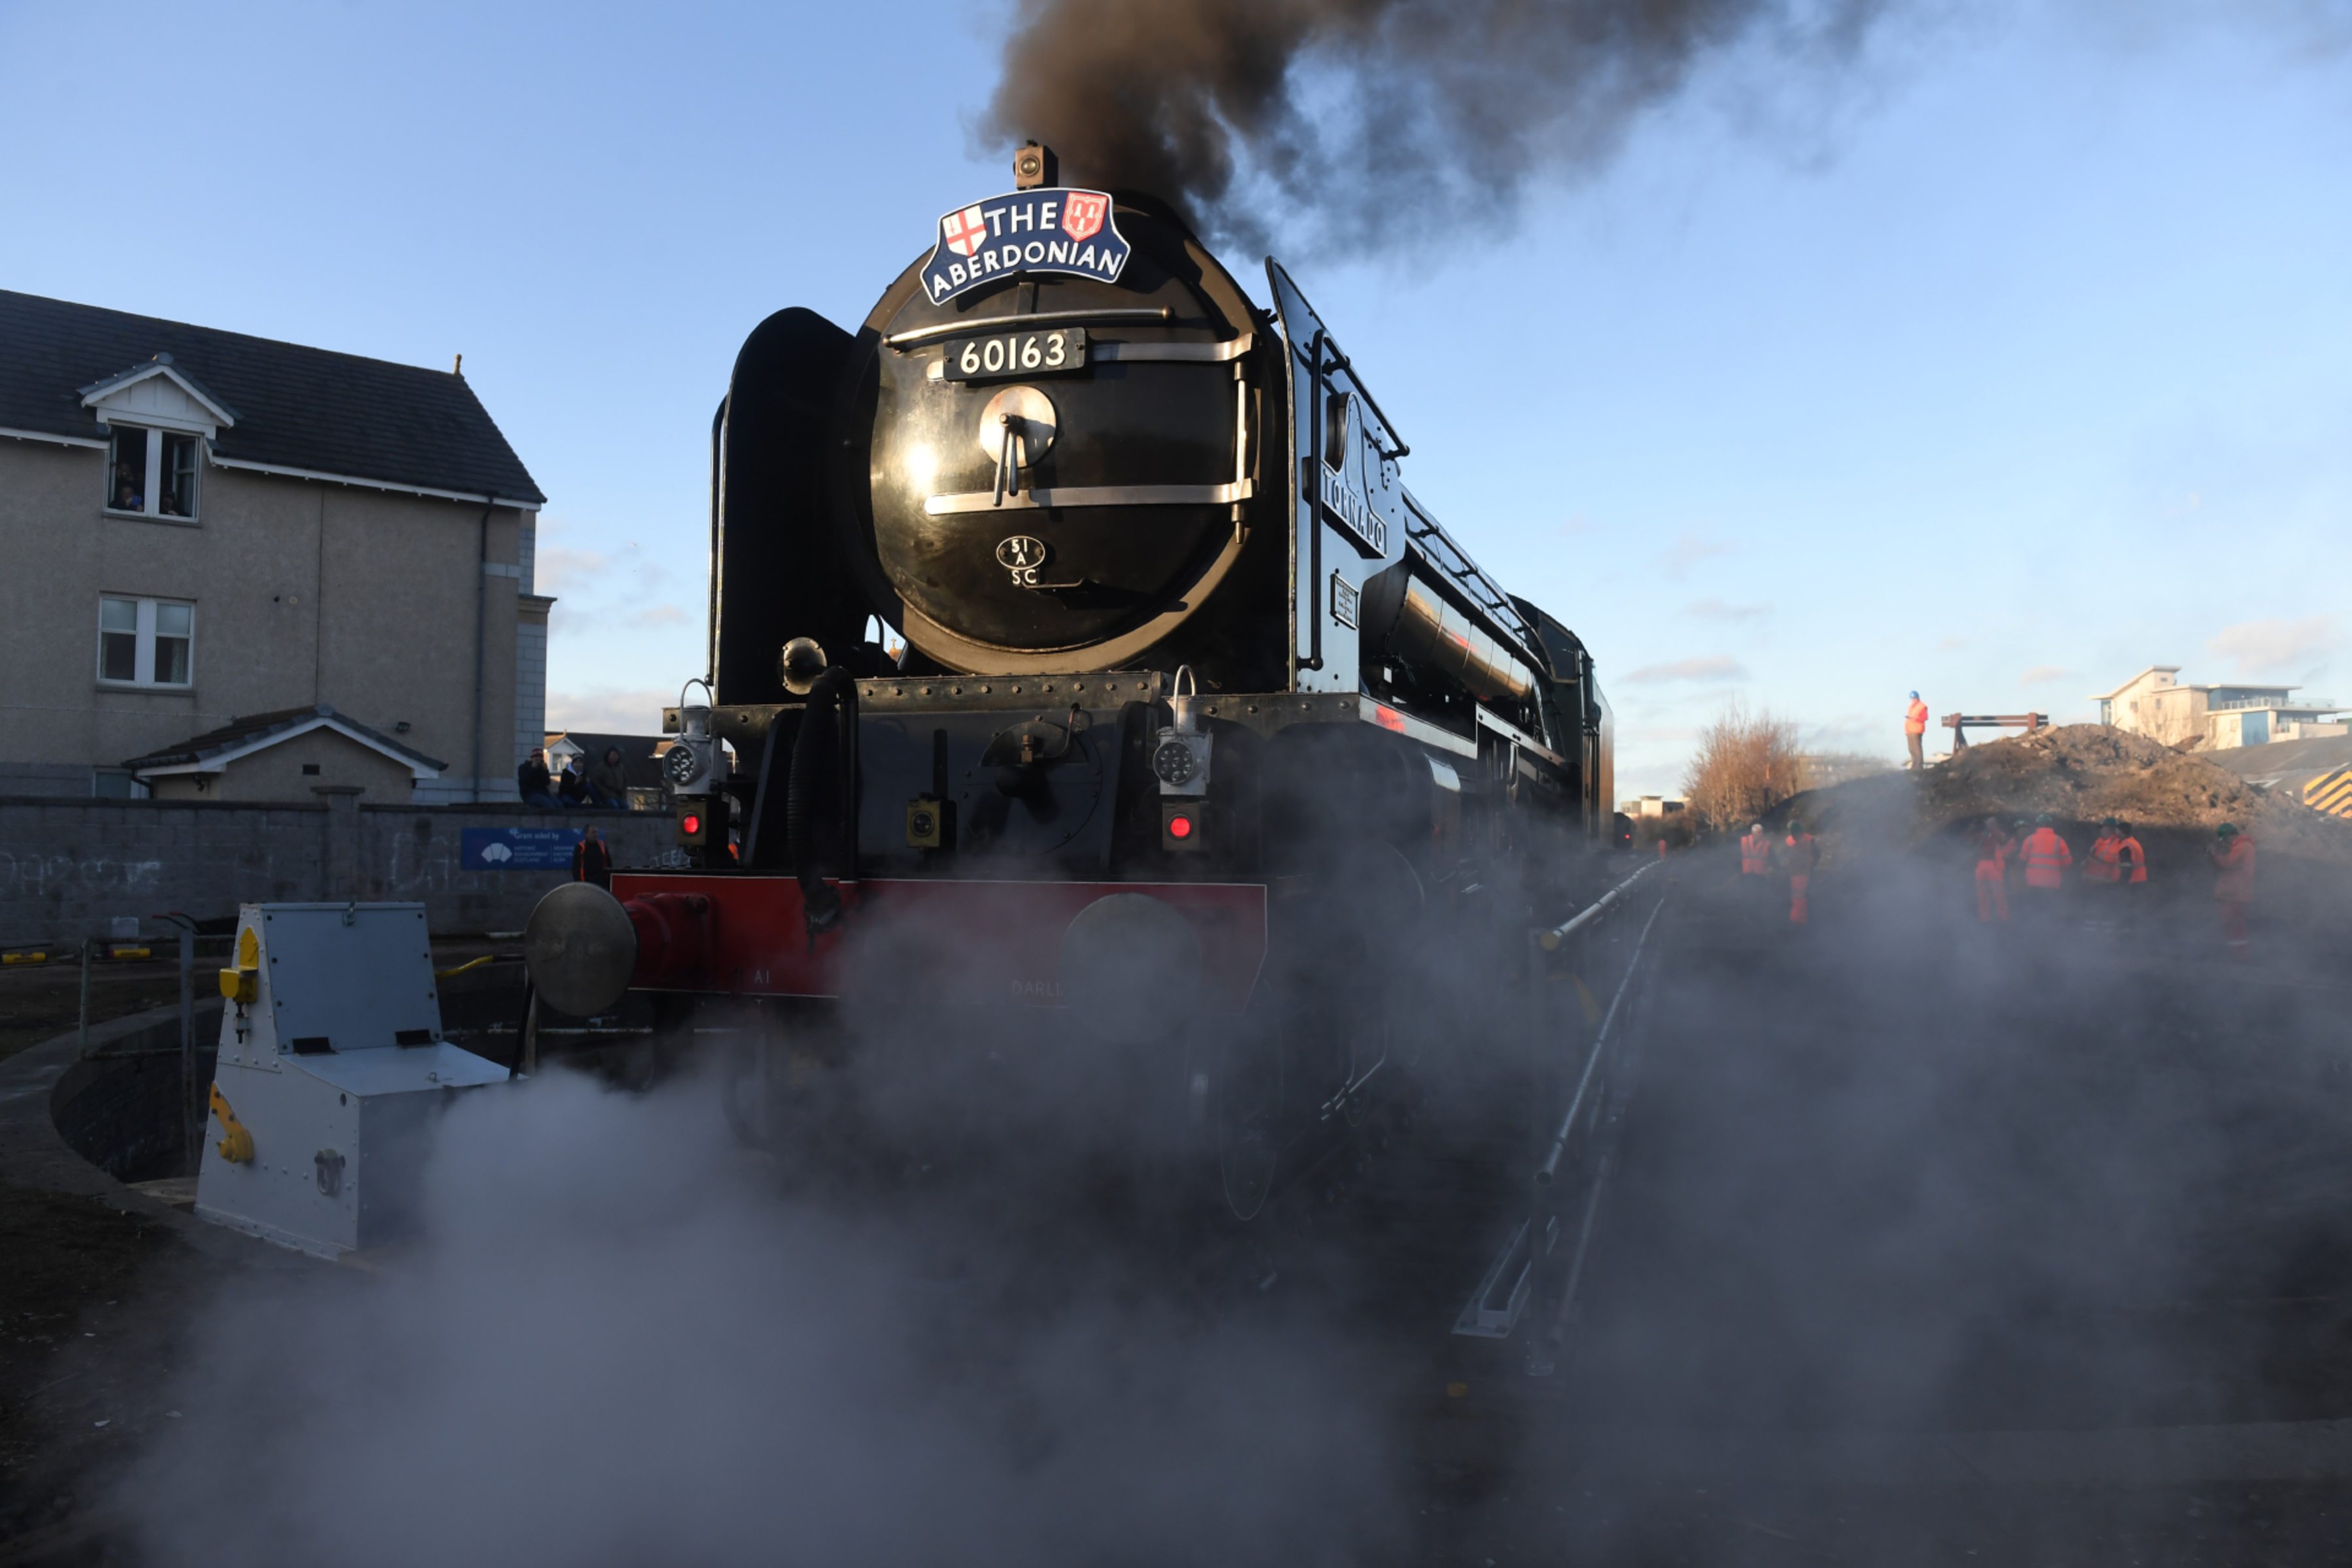 The Aberdonian steam train.